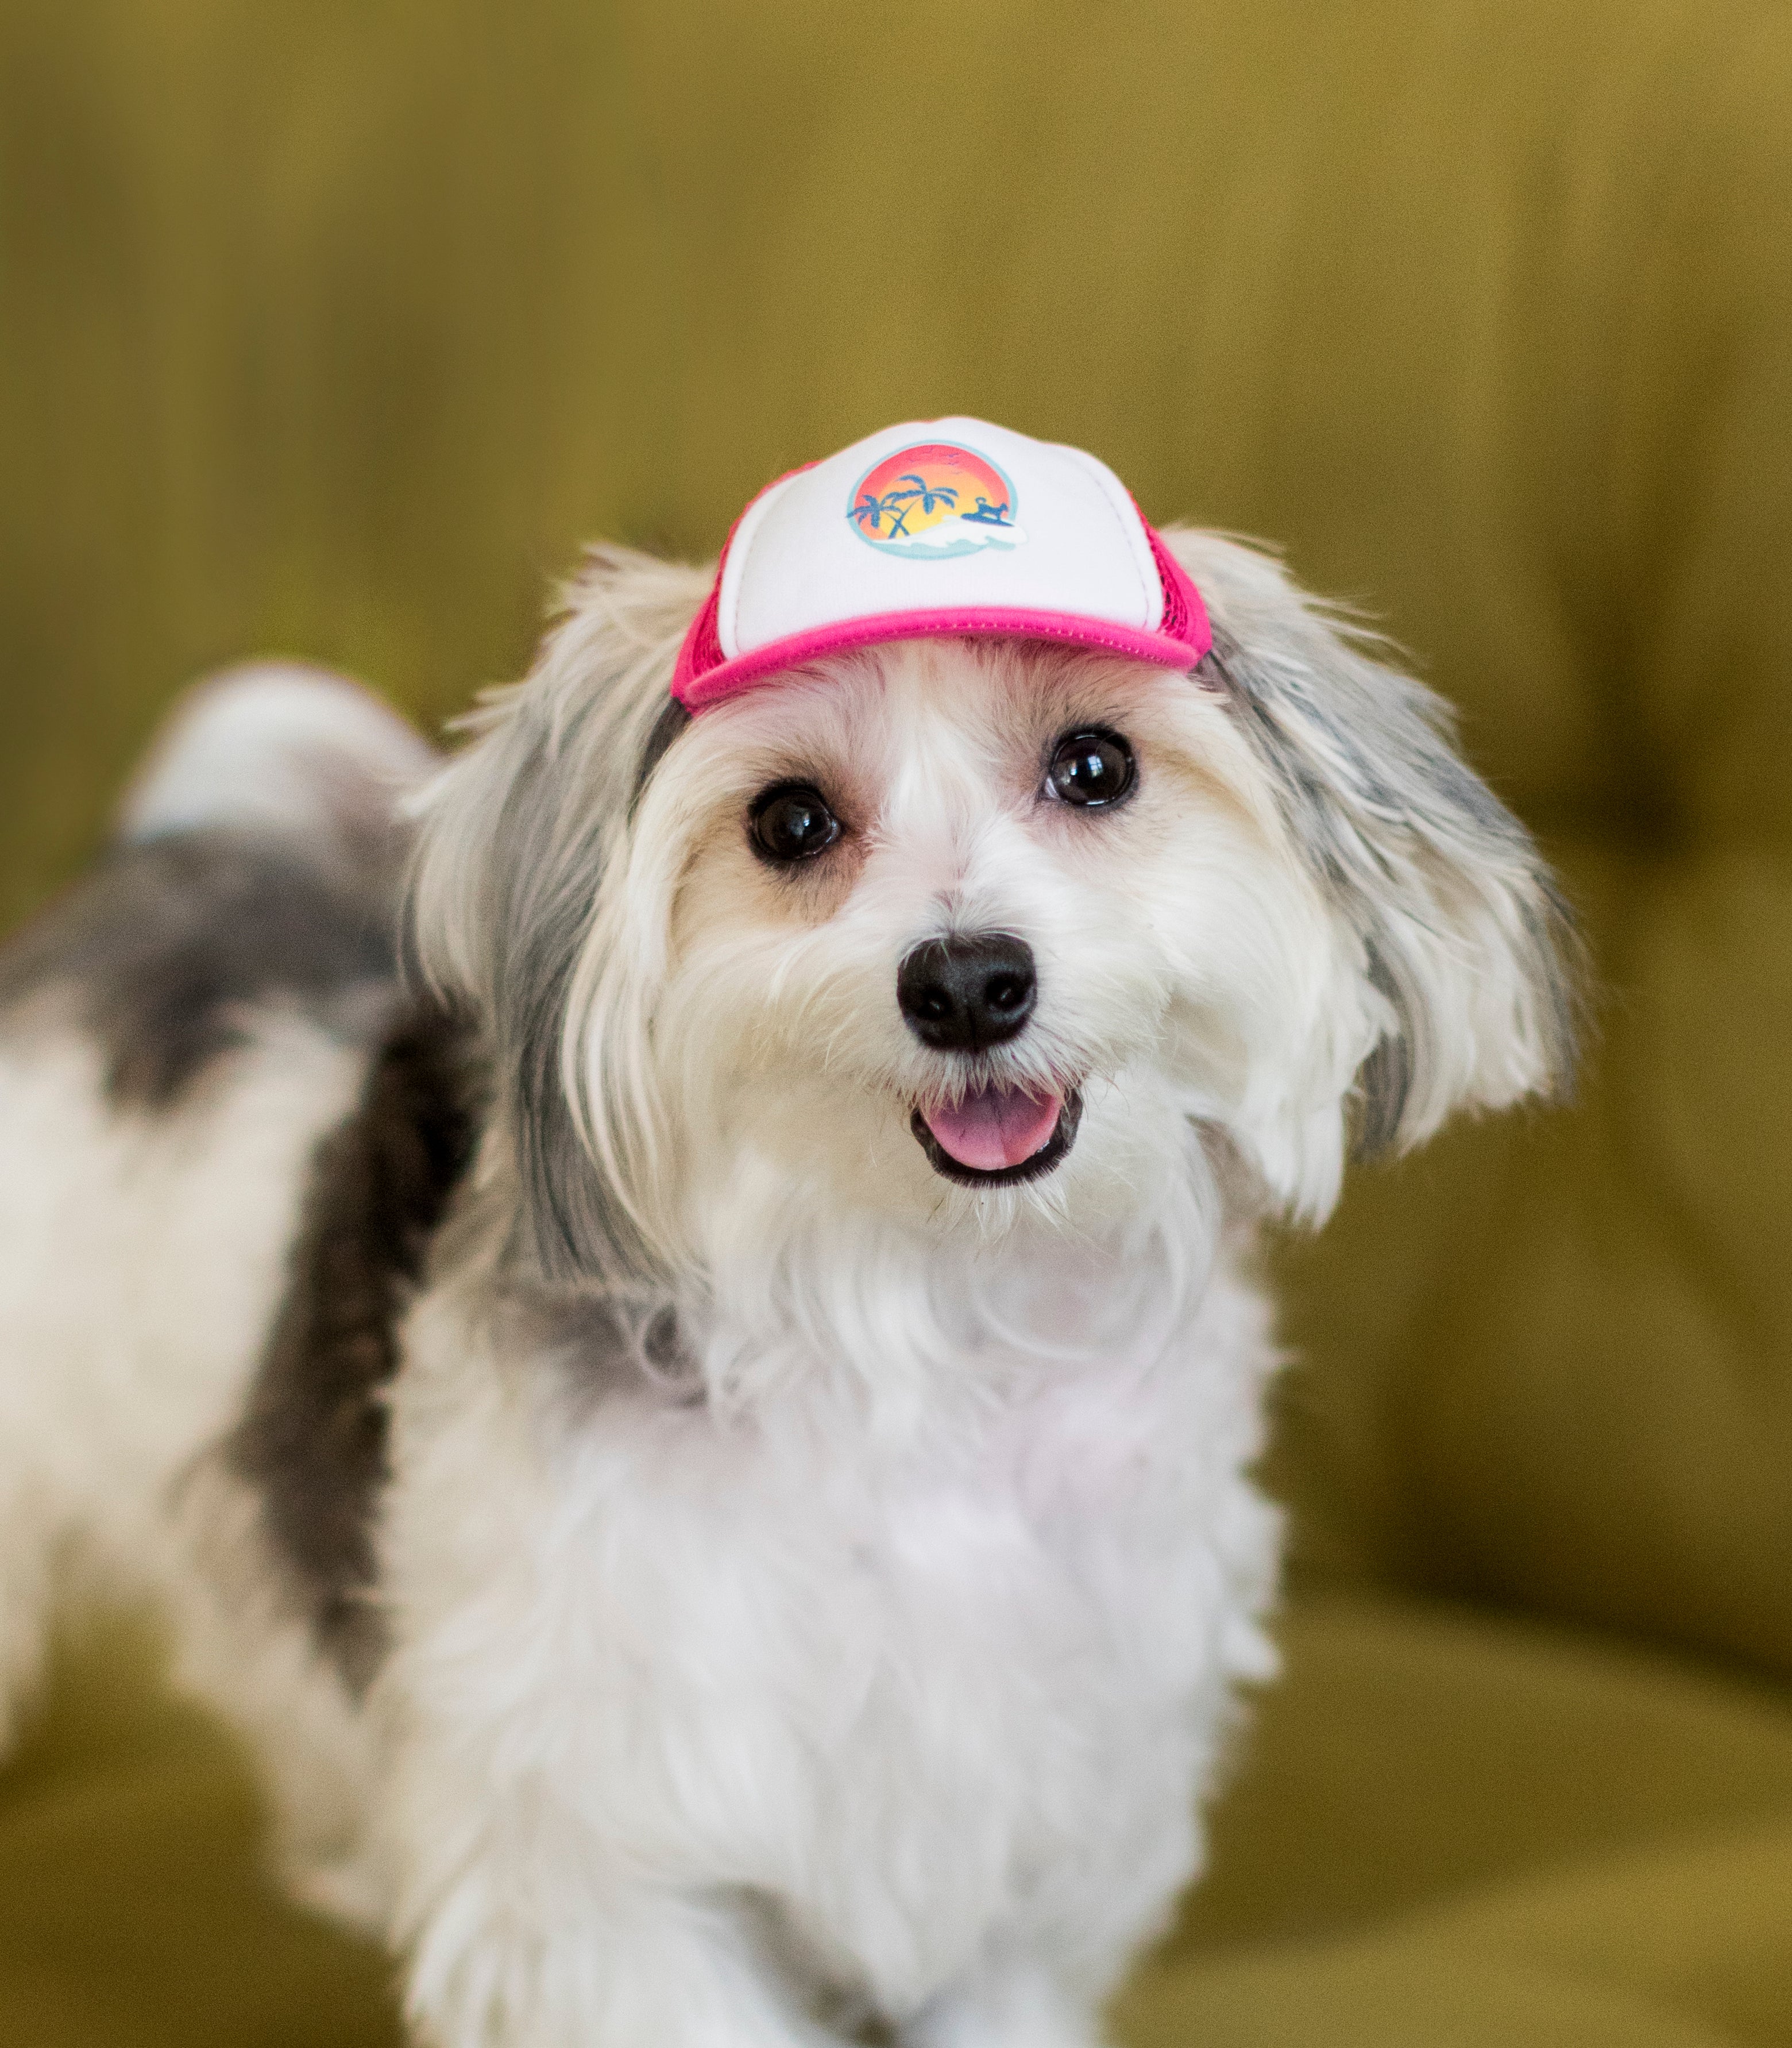 Cute morkie wearing a dog hat - brand: PupLid Dog Hat